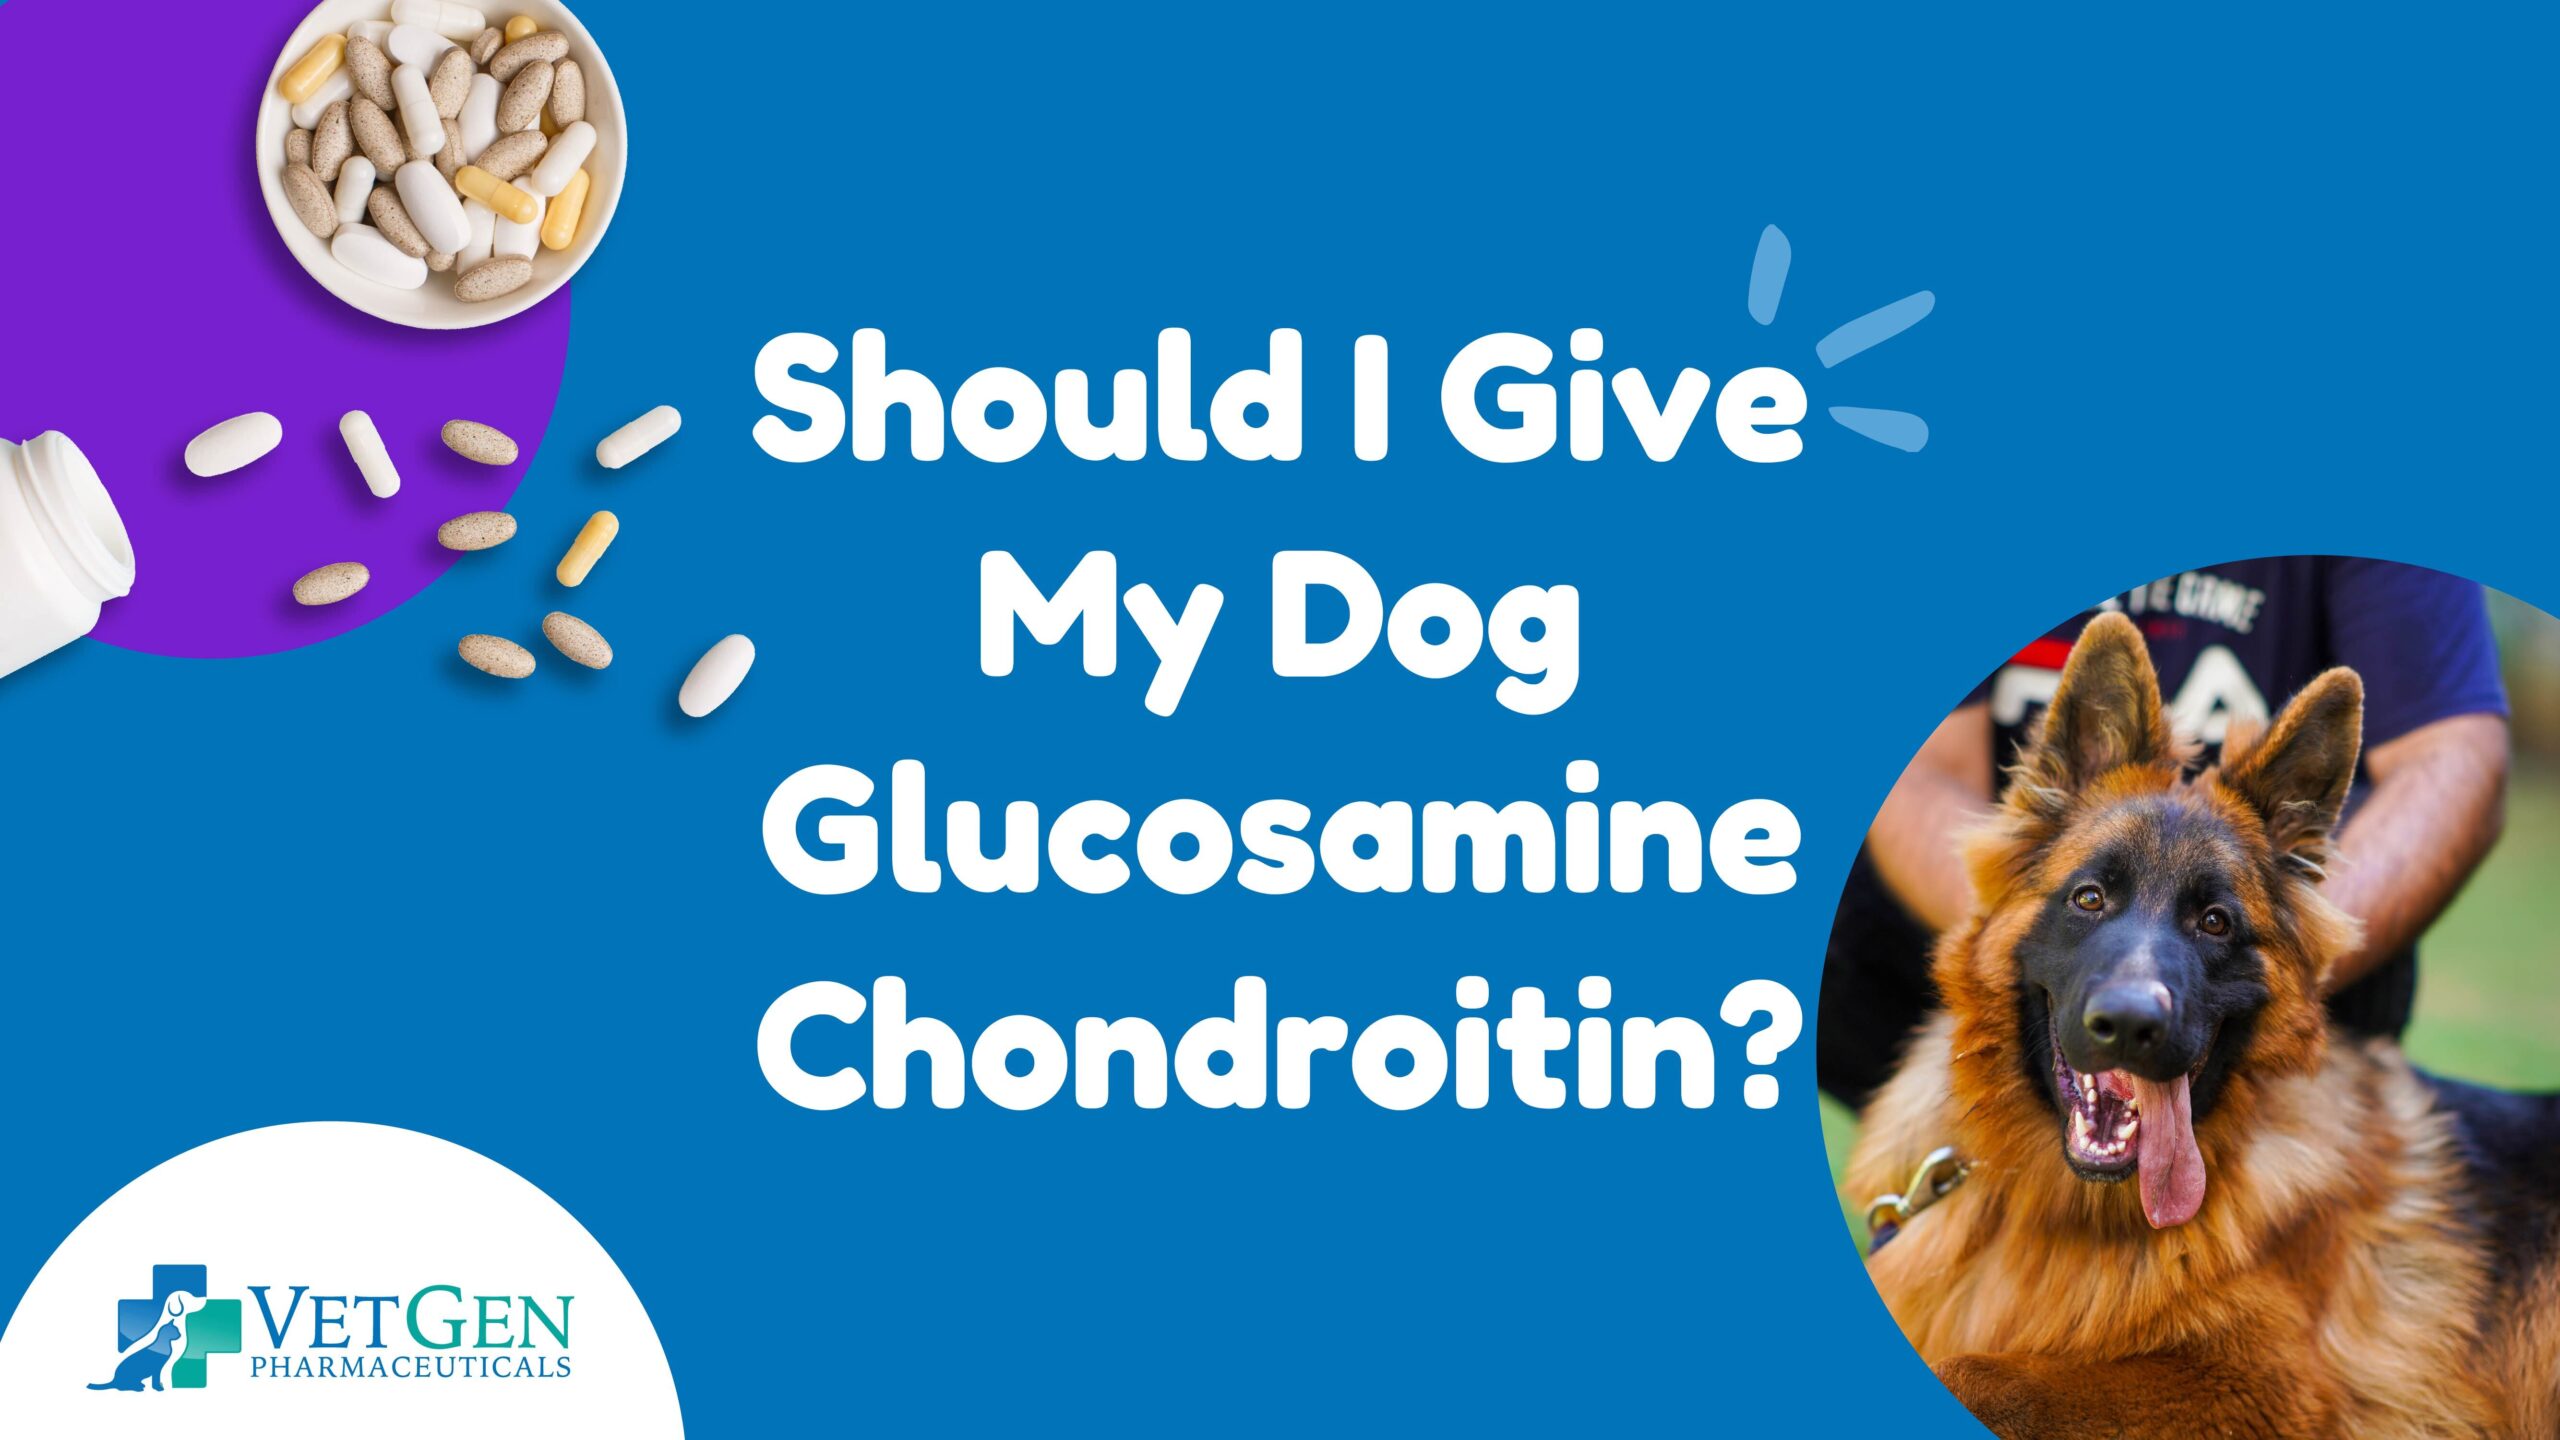 Should I give my dog glucosamine chondroitin